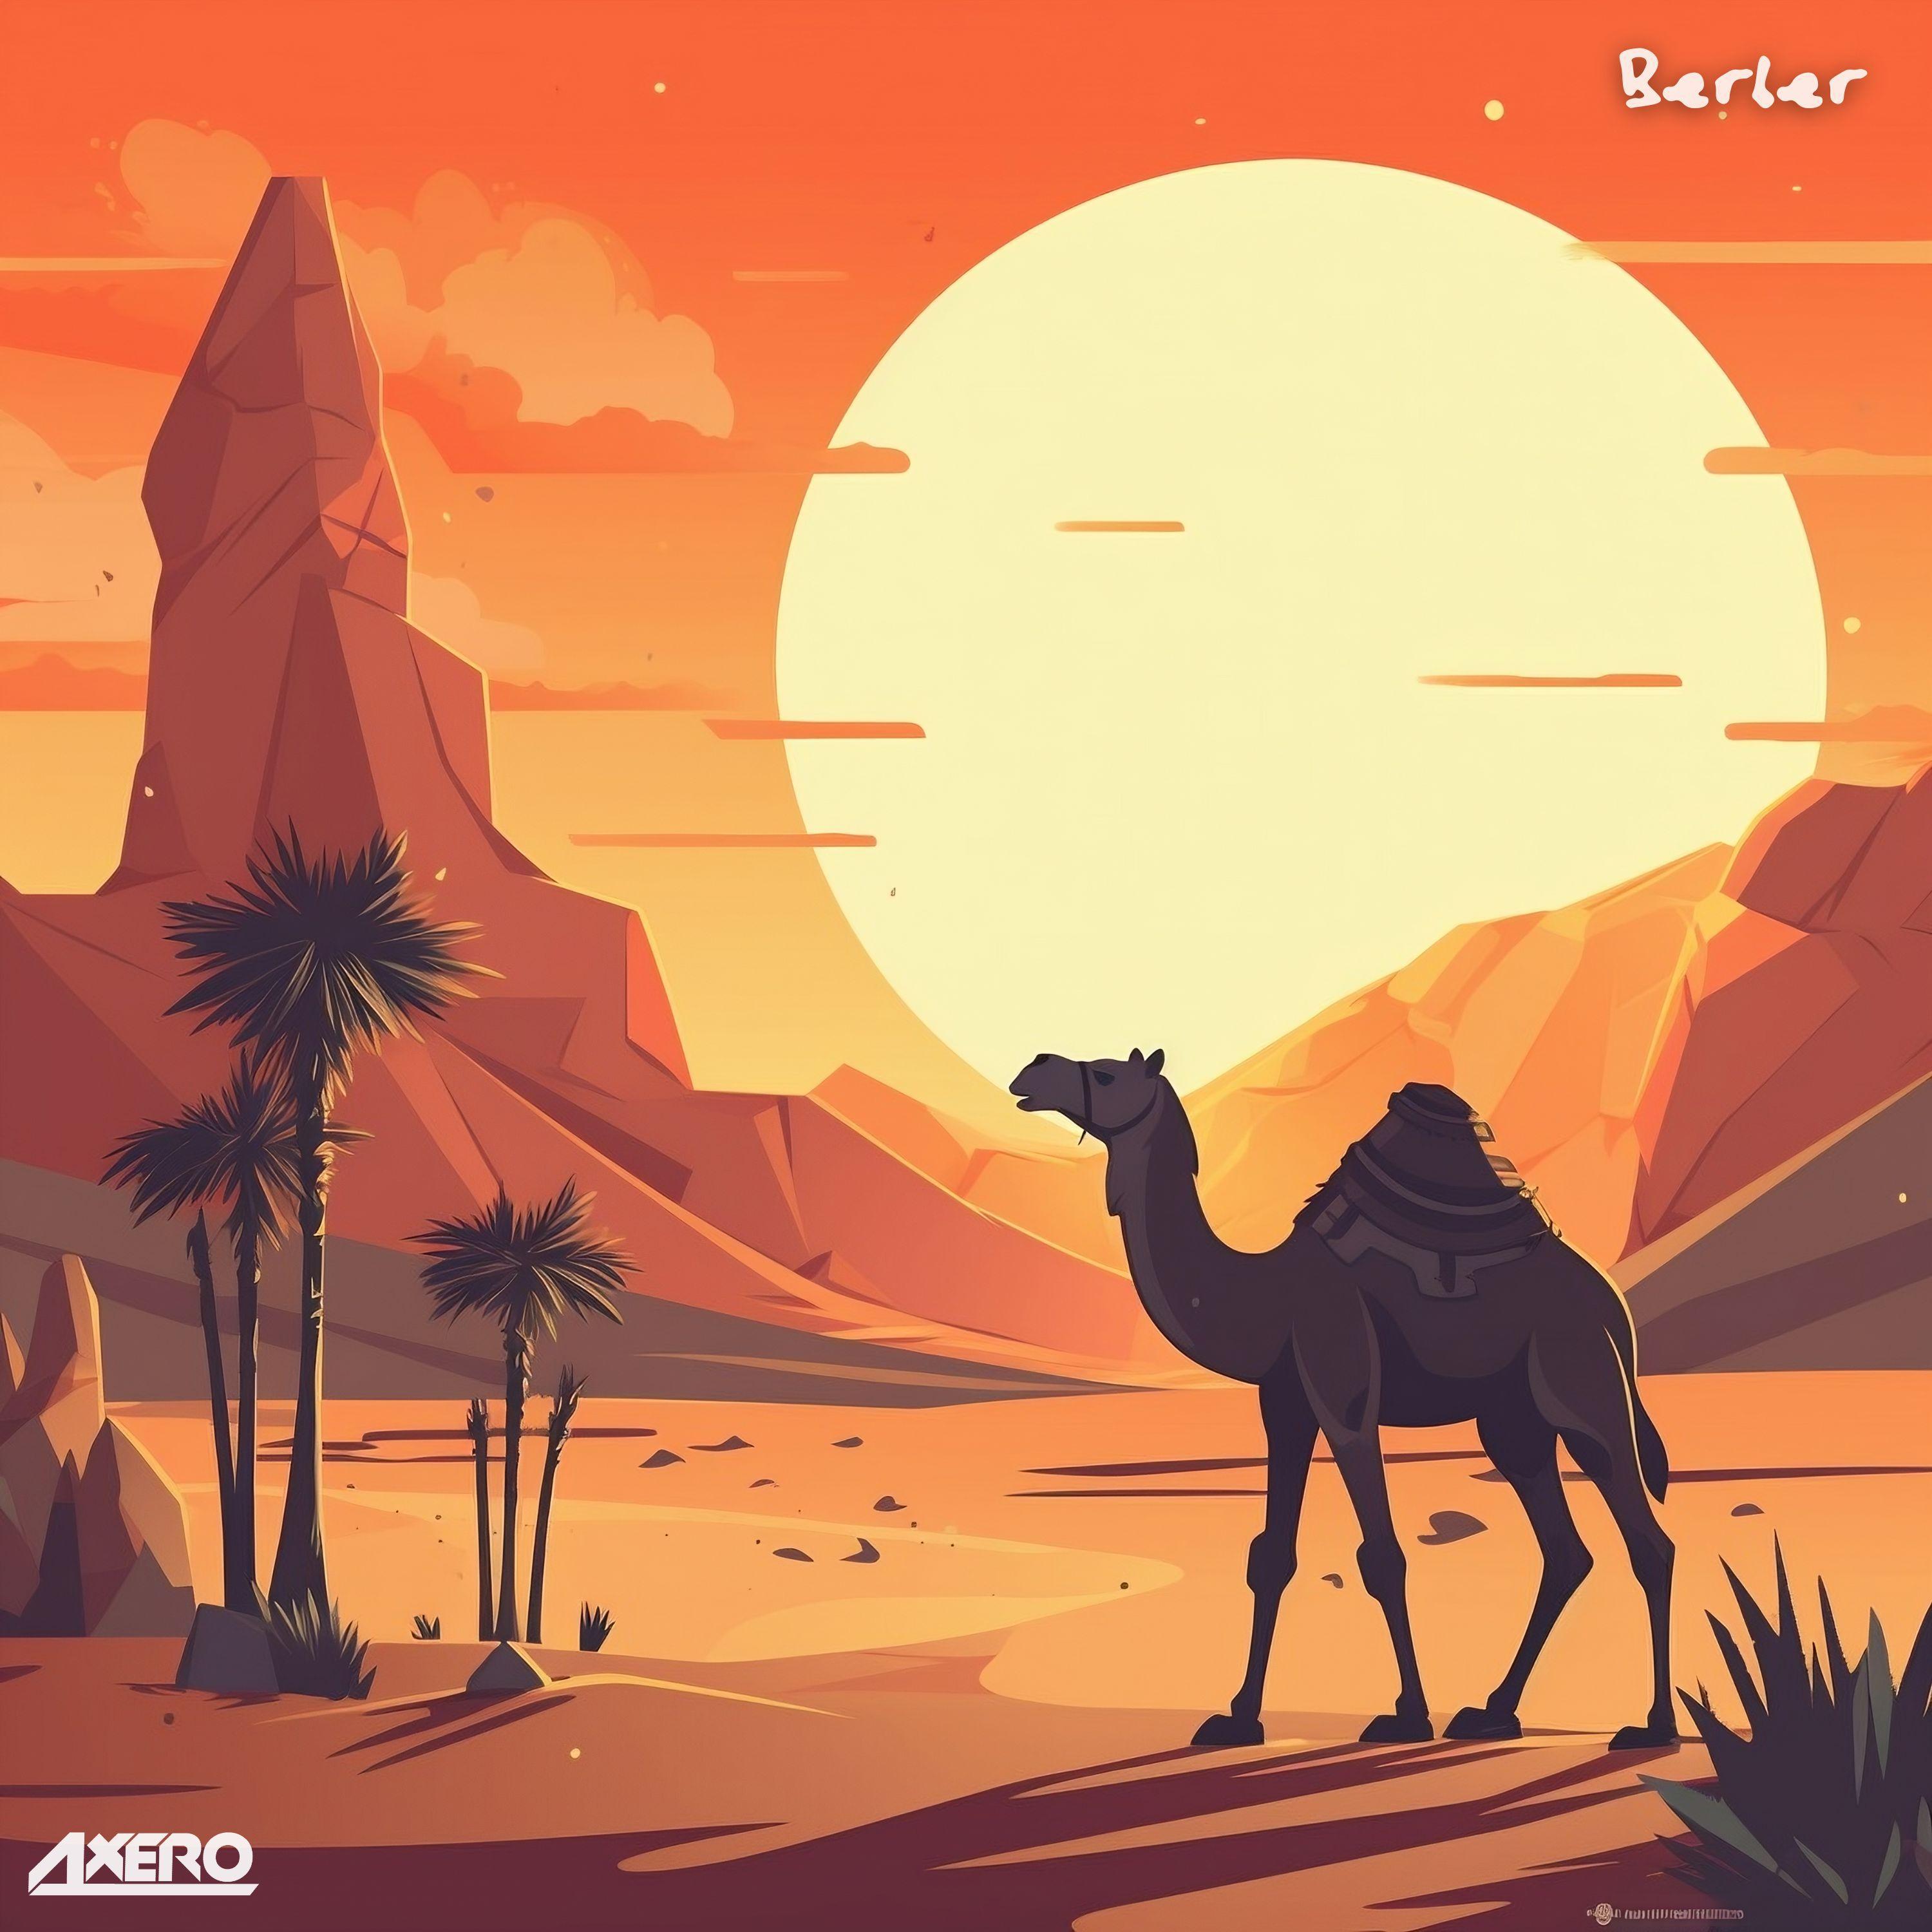 Axero Remix - Berber (feat. Axero)